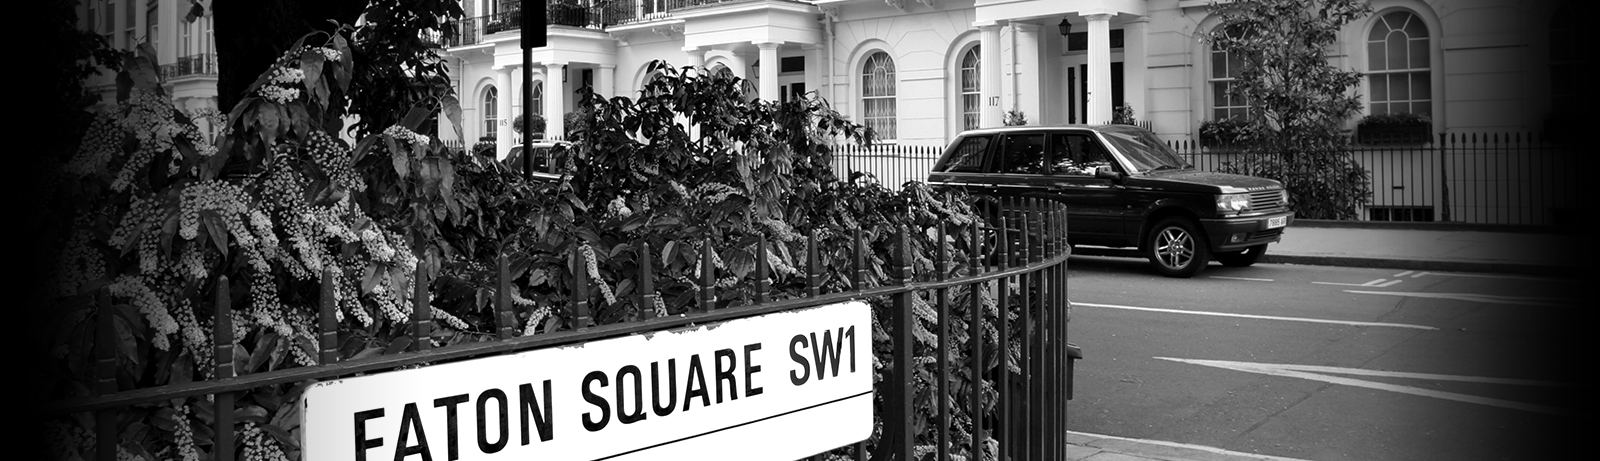 Location London Property Ltd | Eaton Square